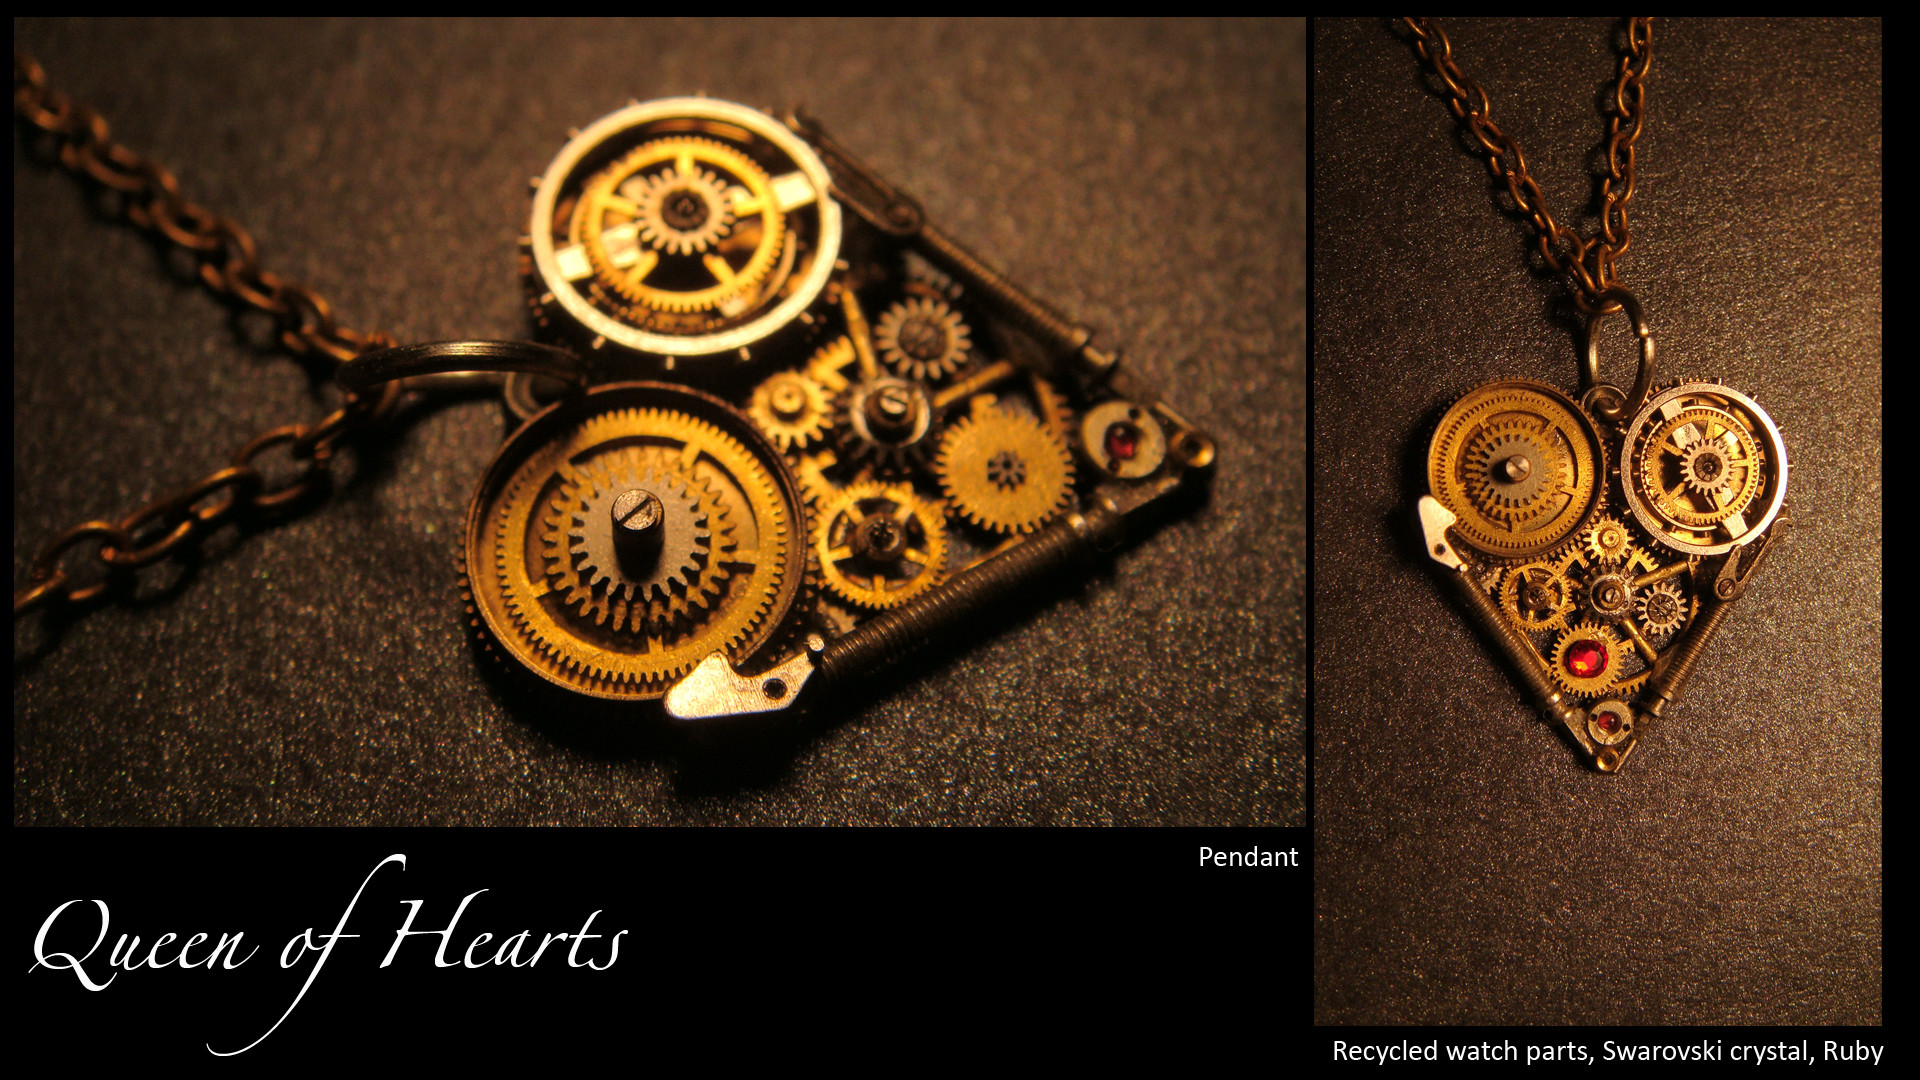 1920x1080 ... Steampunk pendant : Queen of Hearts by azazel-is-burning